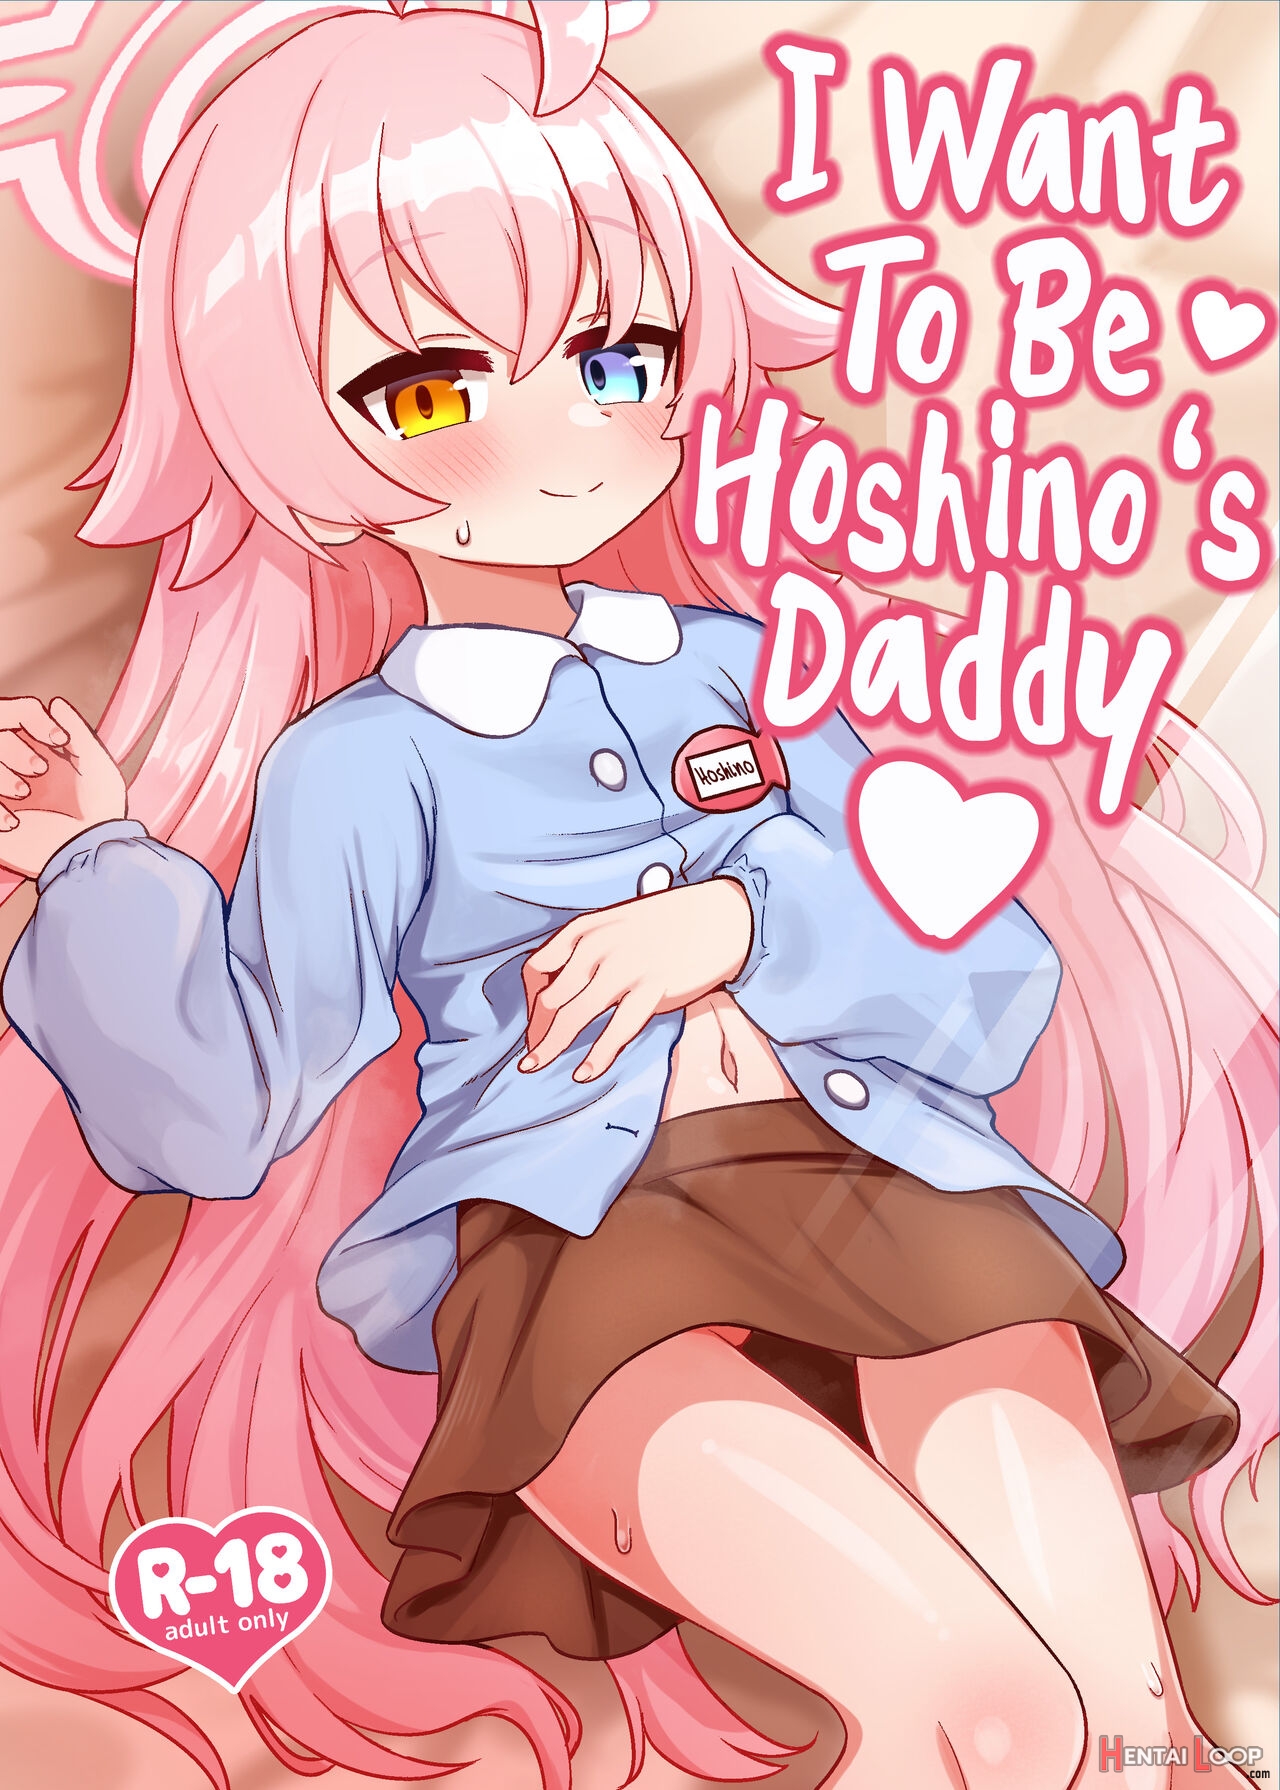 I Want To Be Hoshino's Daddy (by Samejima Retro) - Hentai doujinshi for  free at HentaiLoop